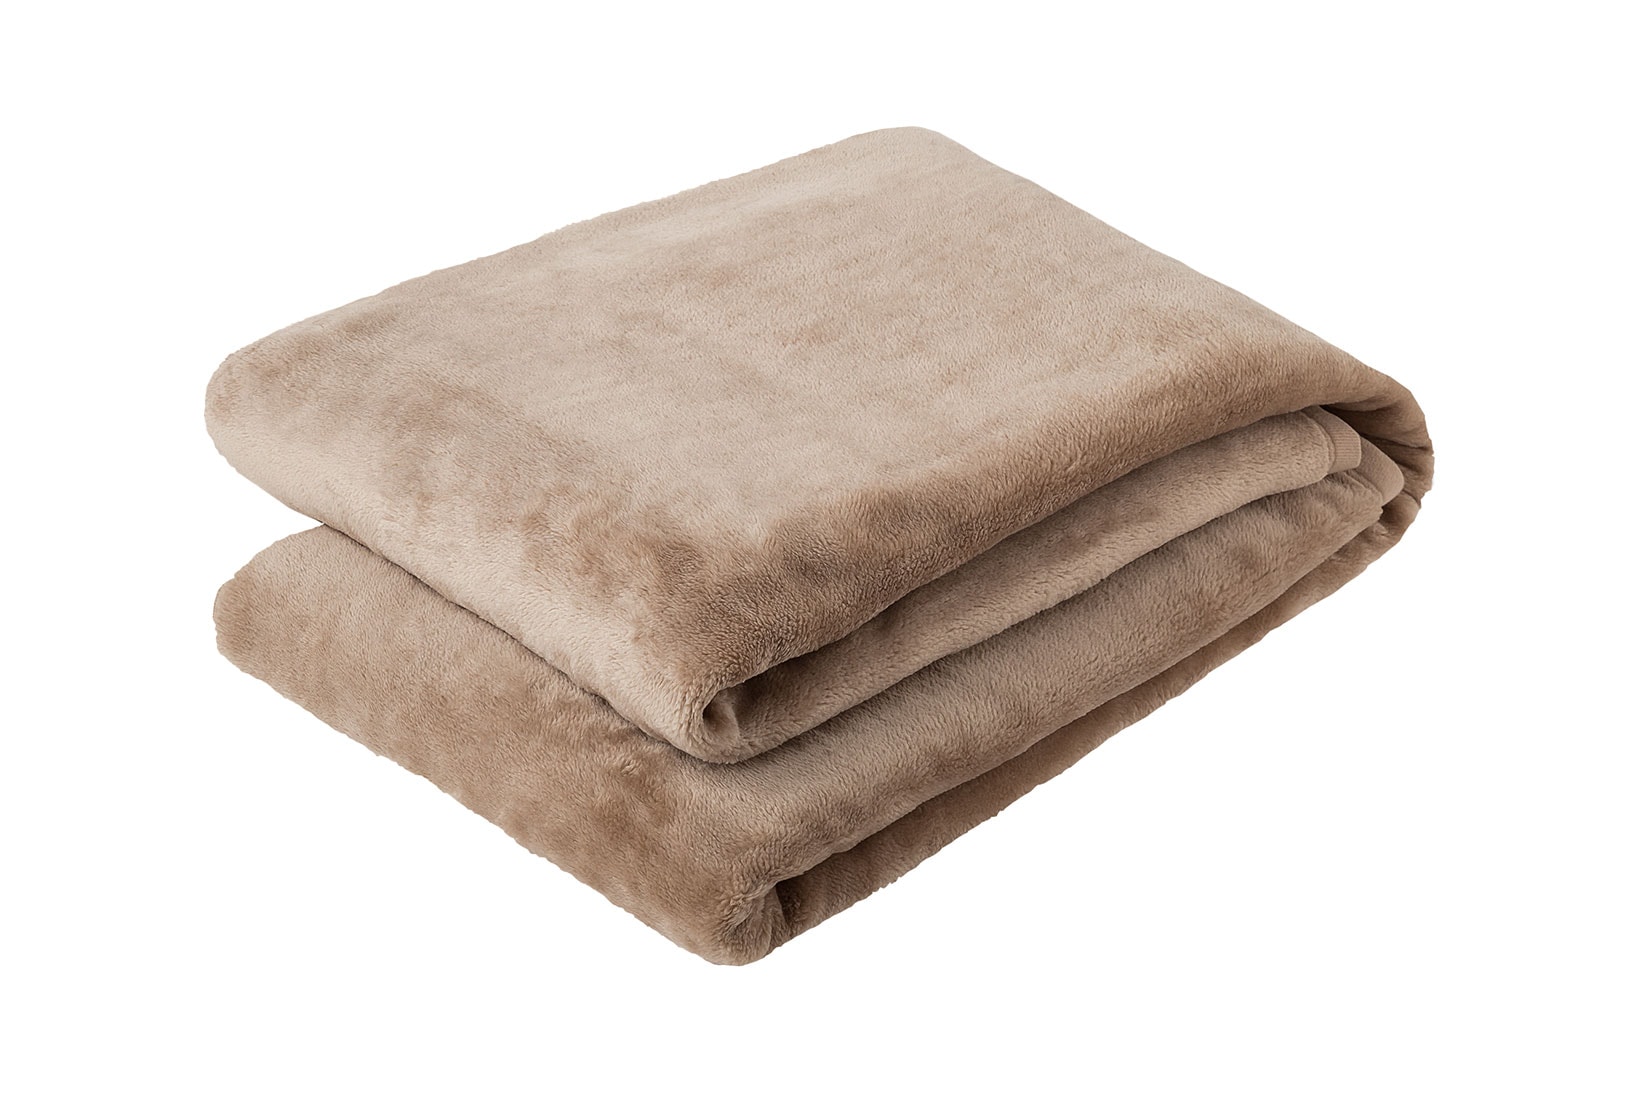 uniqlo heattech blankets winter bedding warm beige gray brown sleep home